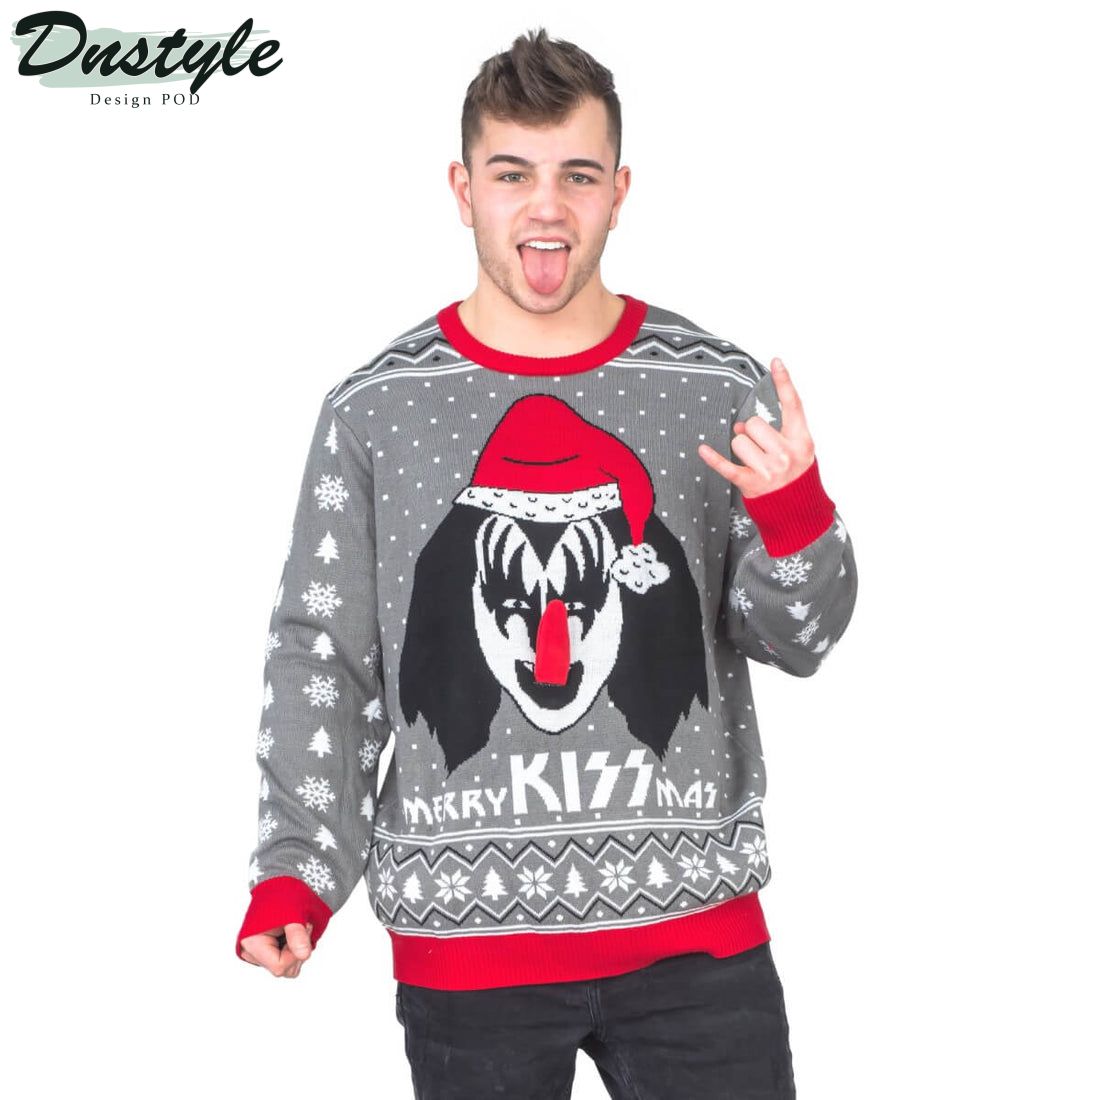 Merry Kissmas Flappy Sweater Kiss Ugly Christmas Sweater